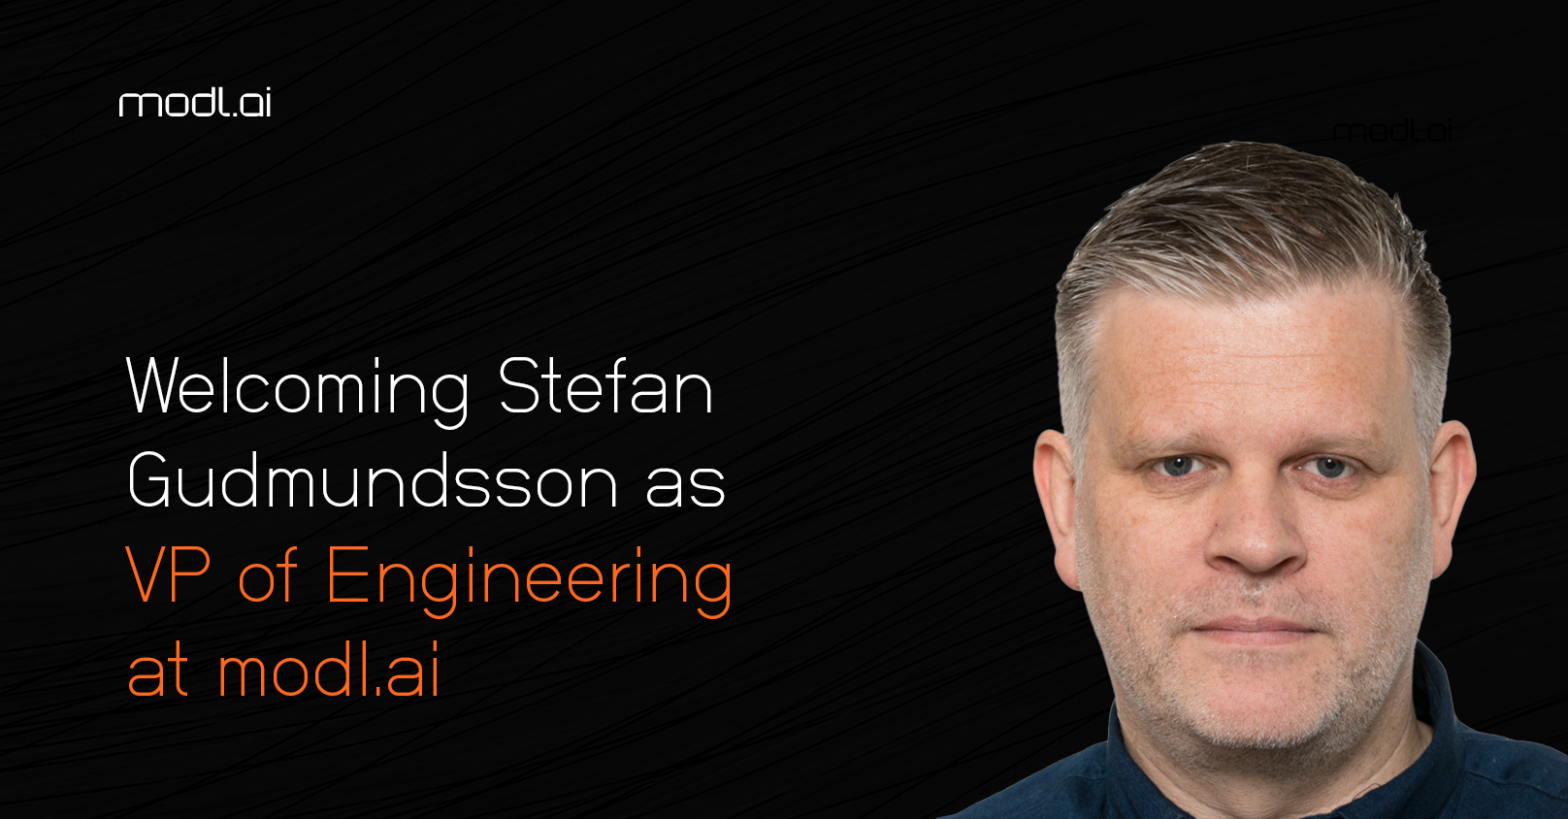 Welcoming Stefan Gudmundsson as VP of Engineering, modl.ai